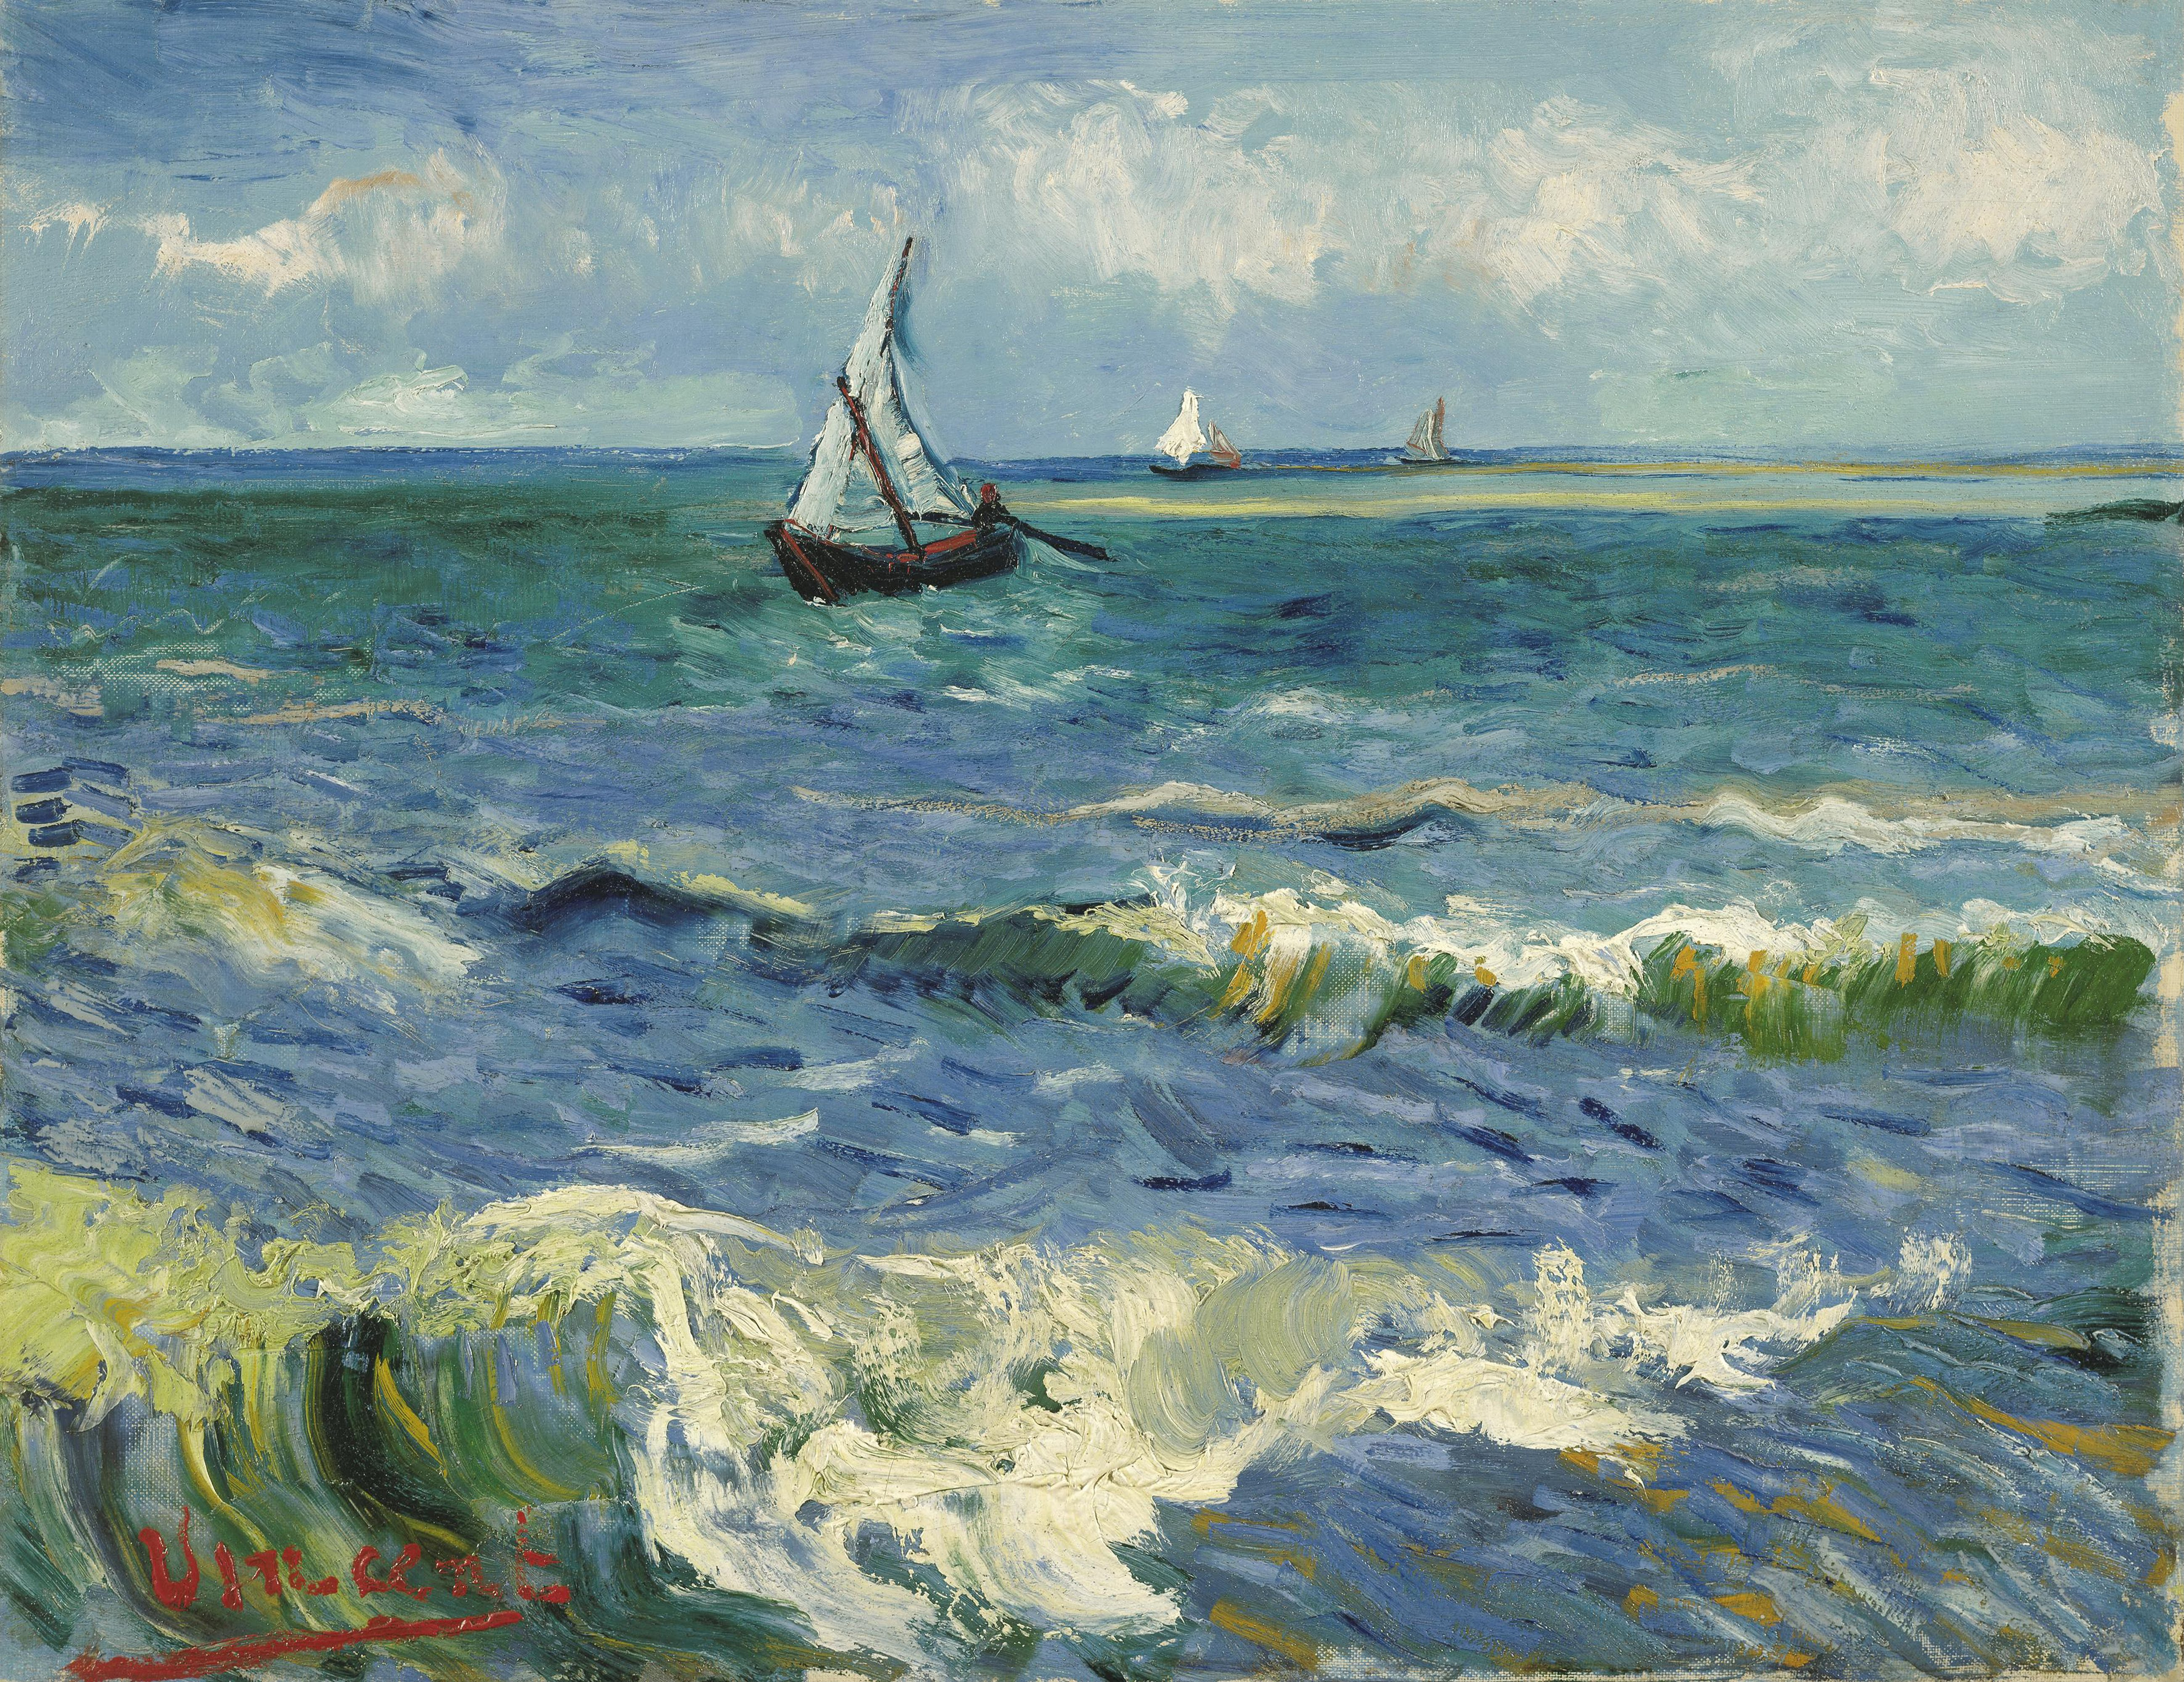 Tengeri táj a Les Saintes-Maries-de-la-Mer közelében by Vincent van Gogh - 1888 - 50,5 x 64,3 cm 